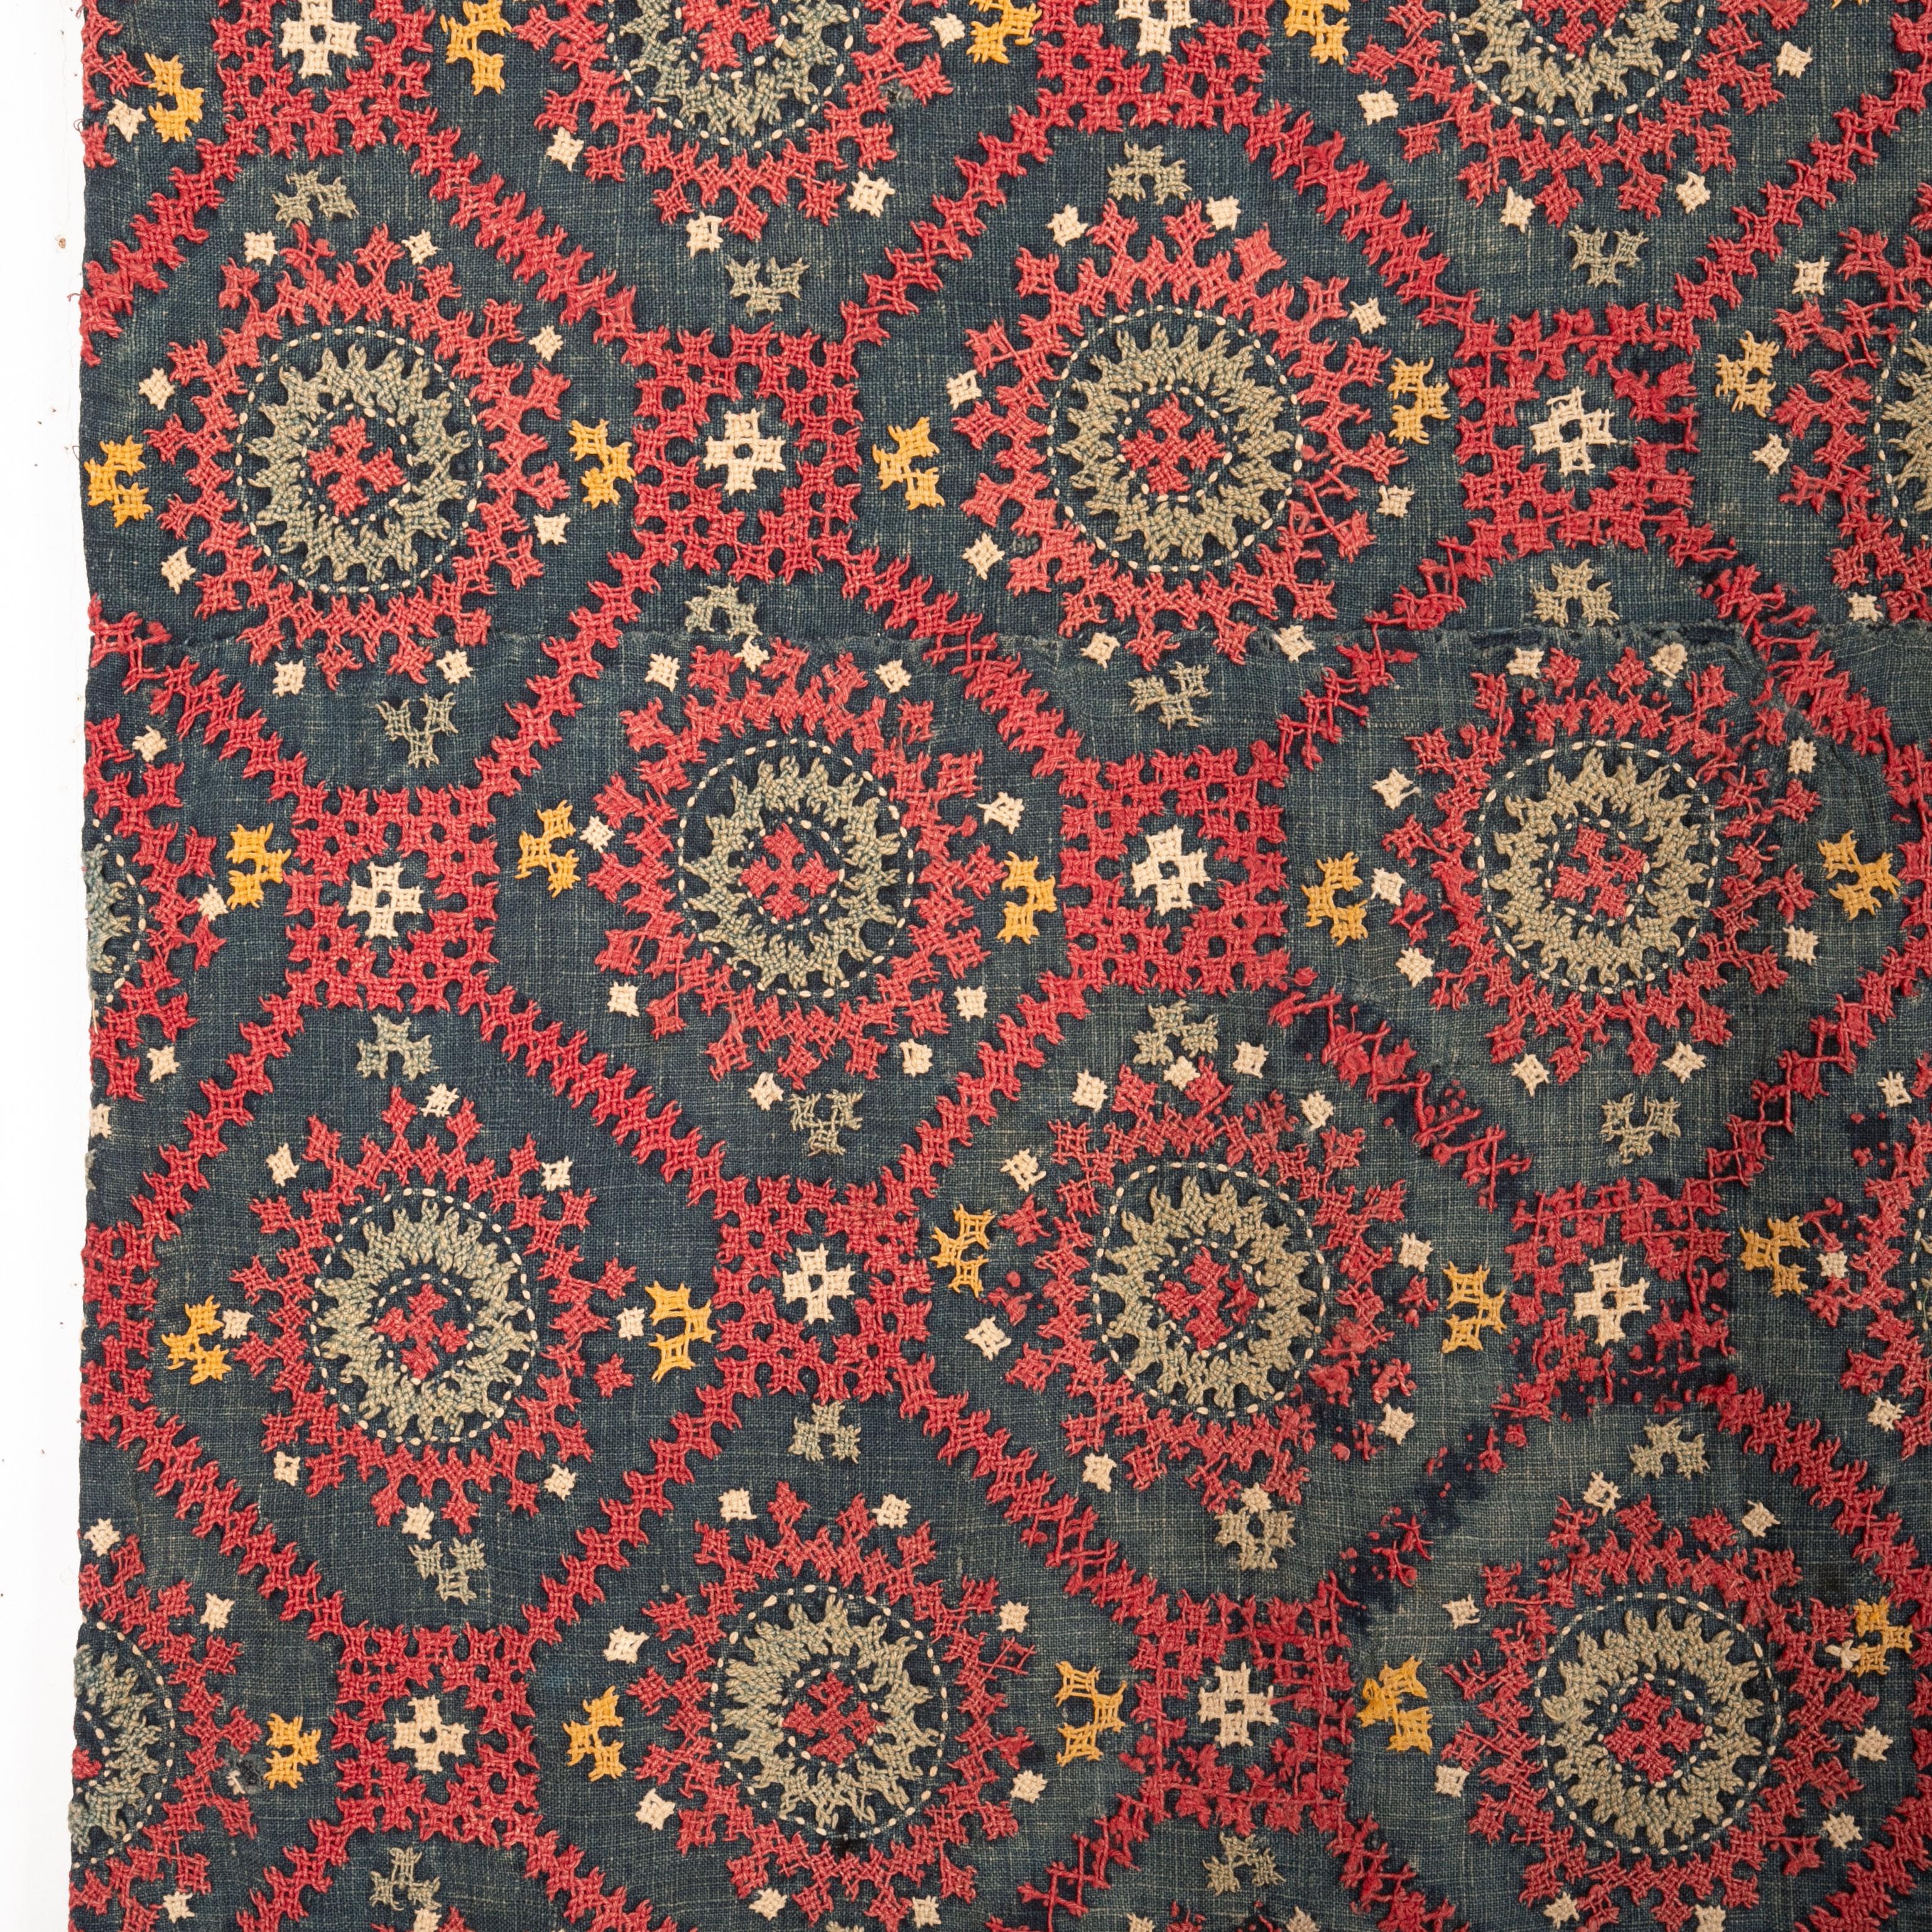 armenian embroidery patterns